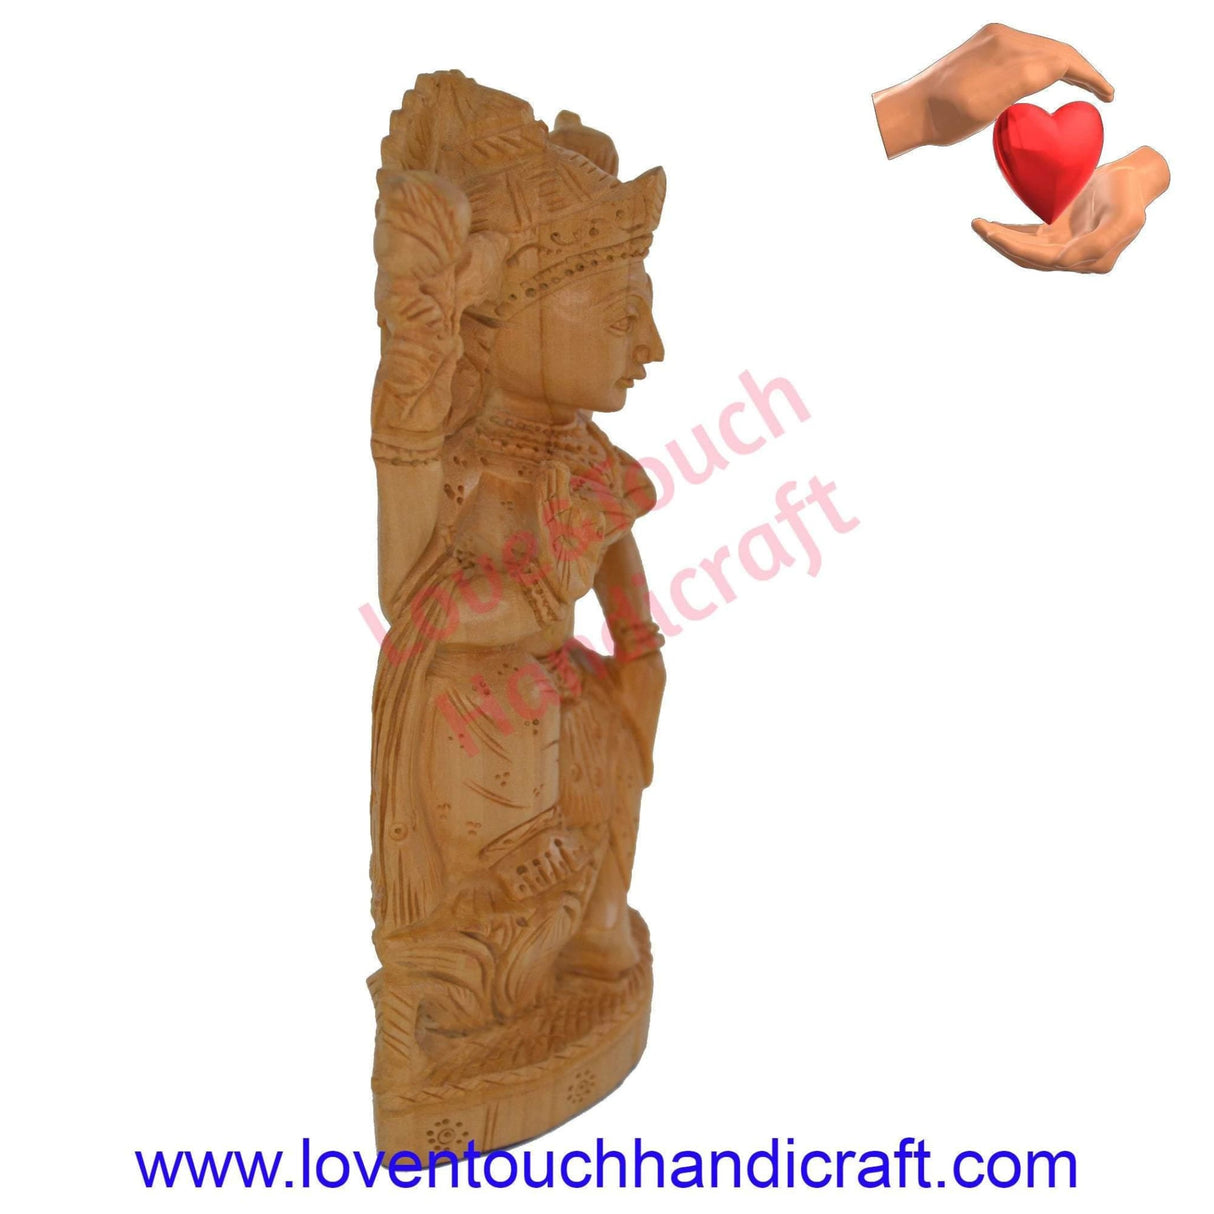 Laxmi ji statue wooden indian goddess lakshmi maa murti